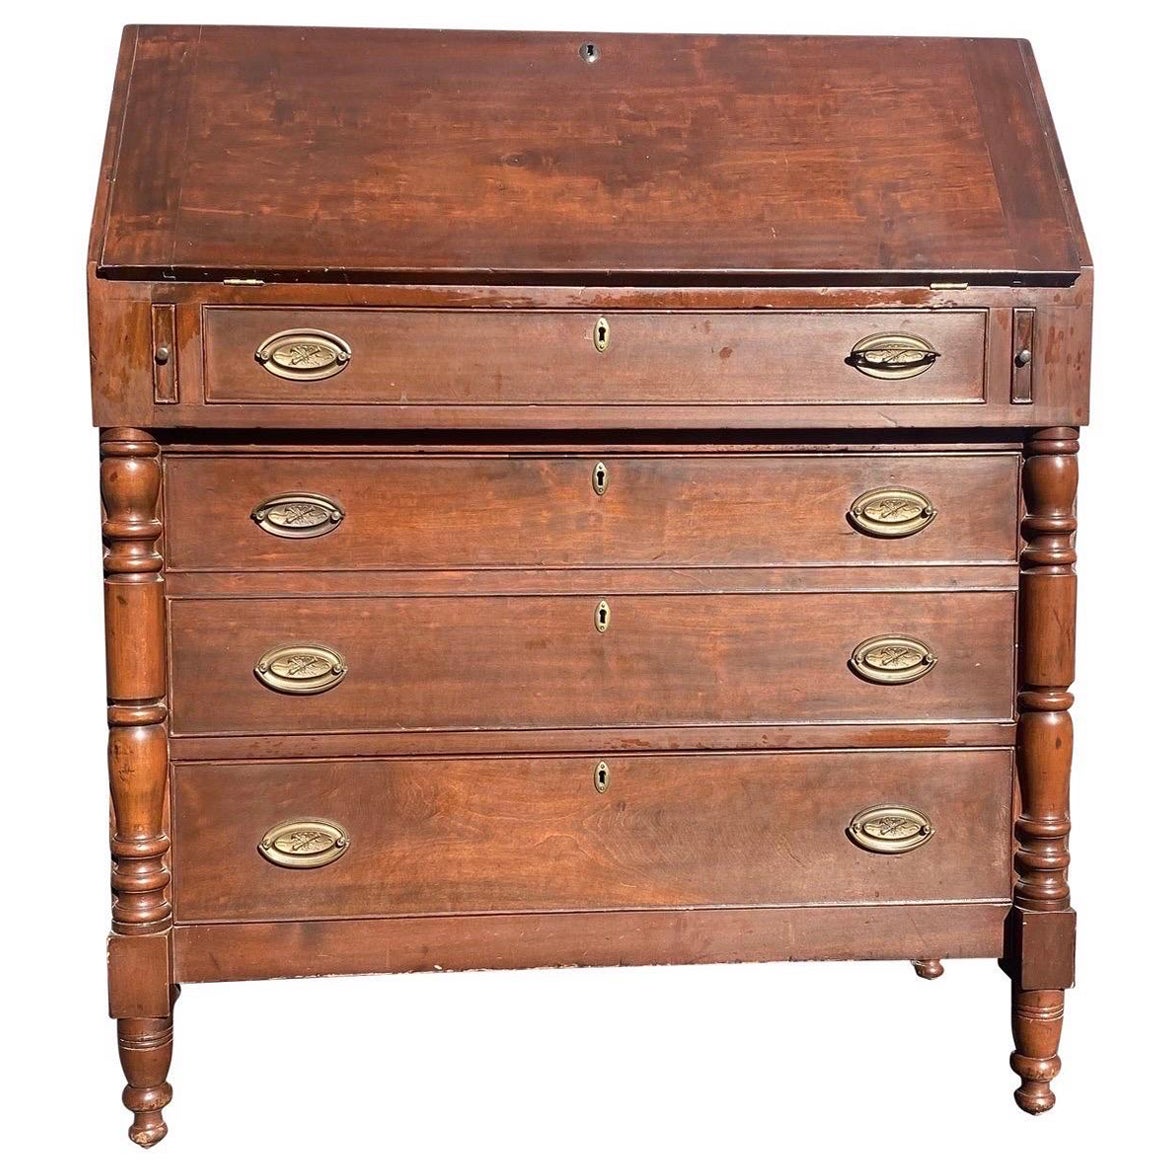 Federal Antique 1825 Drop Front Secretary Desk, Cherry & Tiger Maple